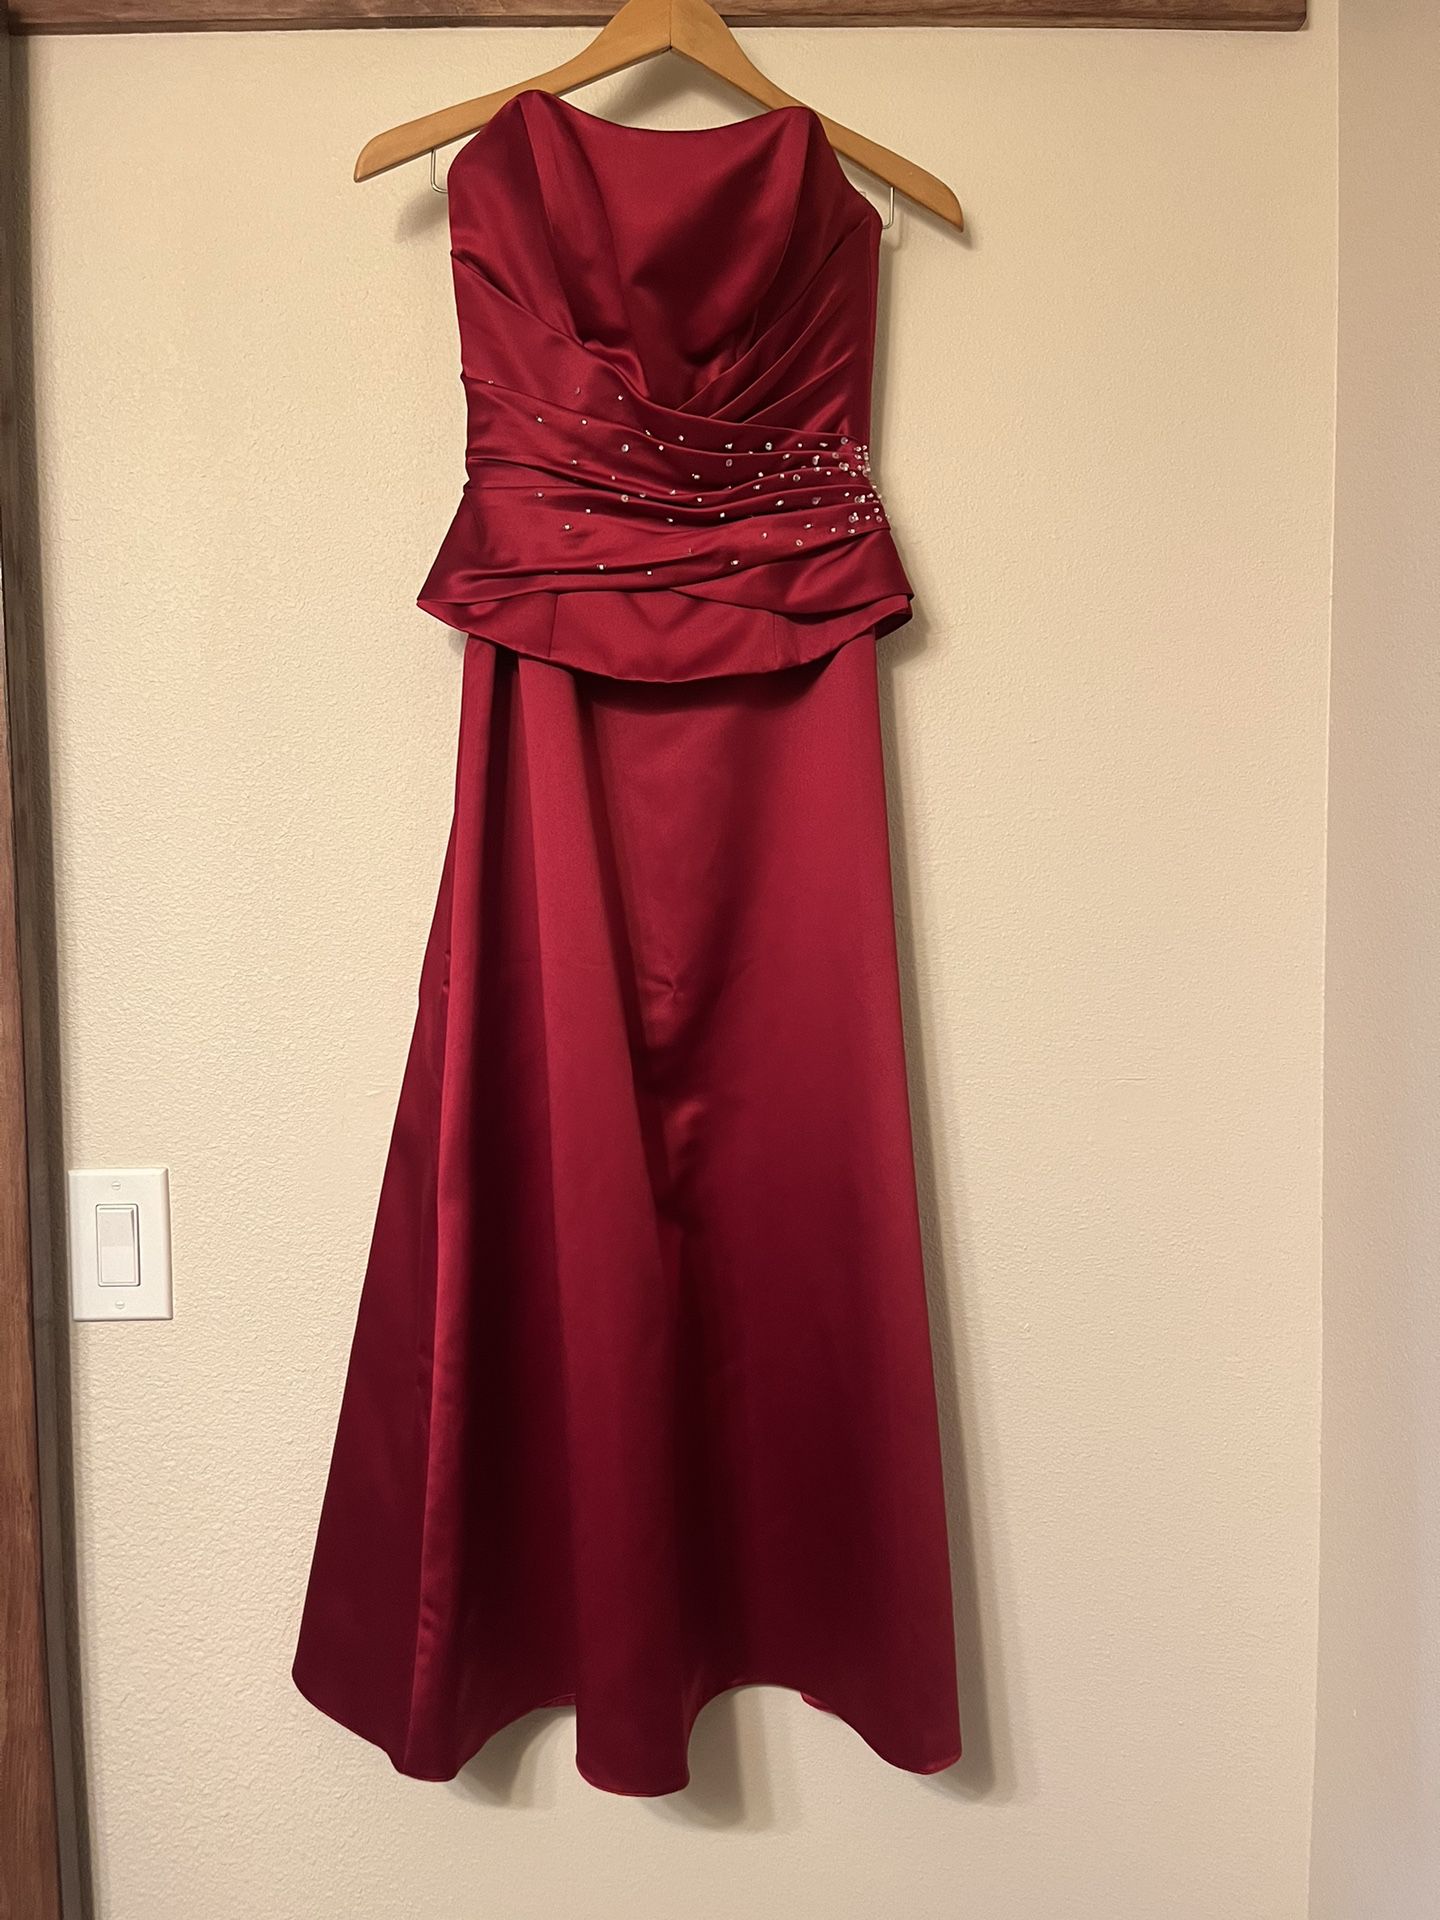 Size 8 Dress